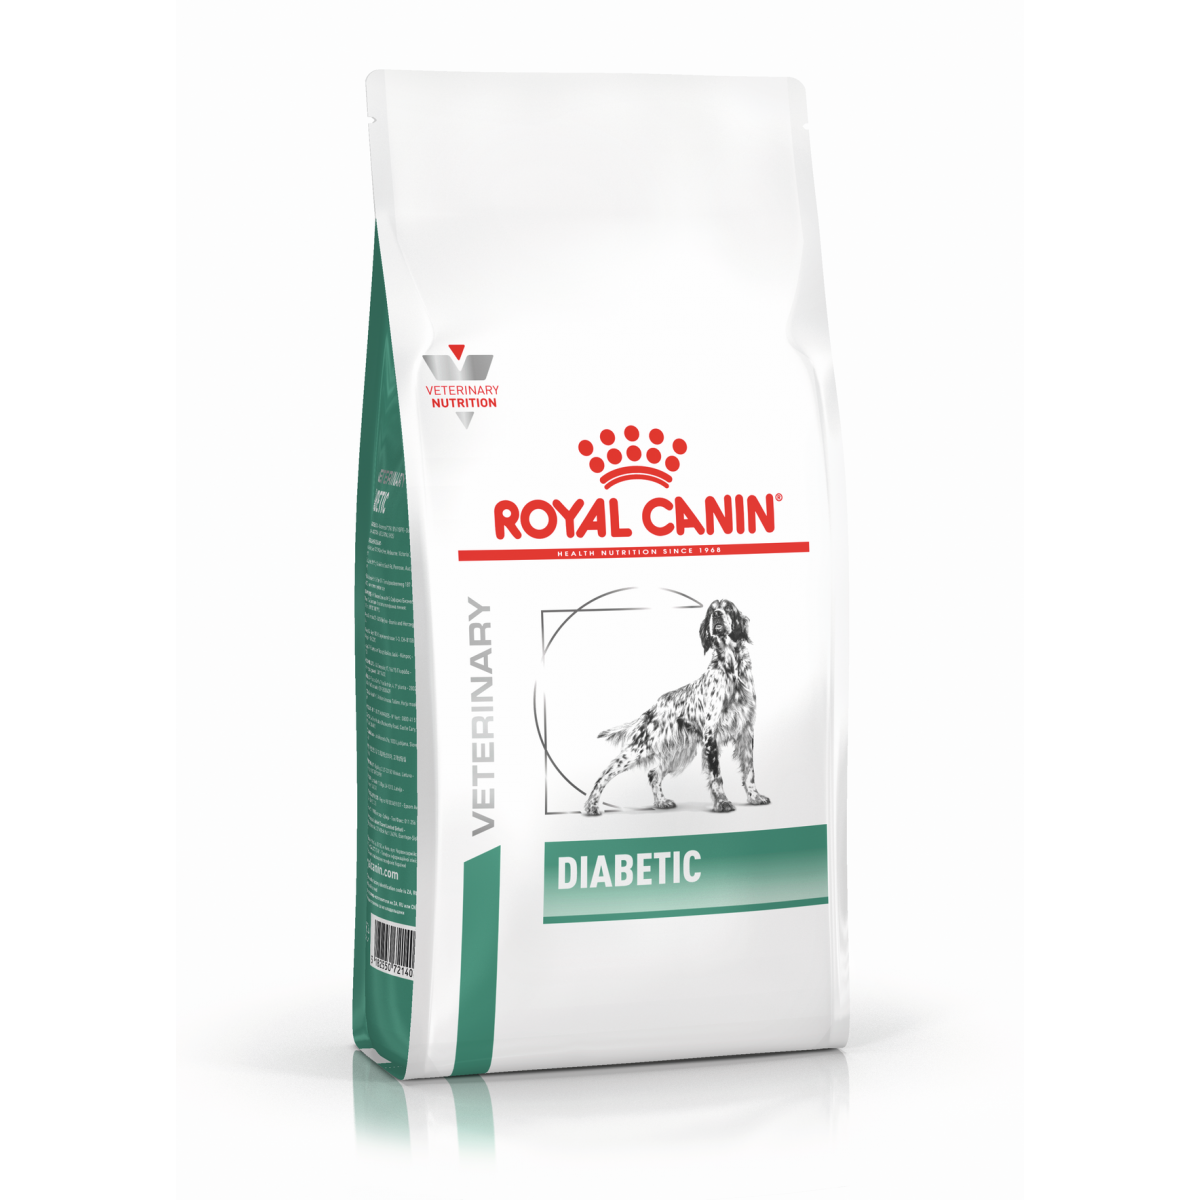 Royal Canin Diabetic д/соб 